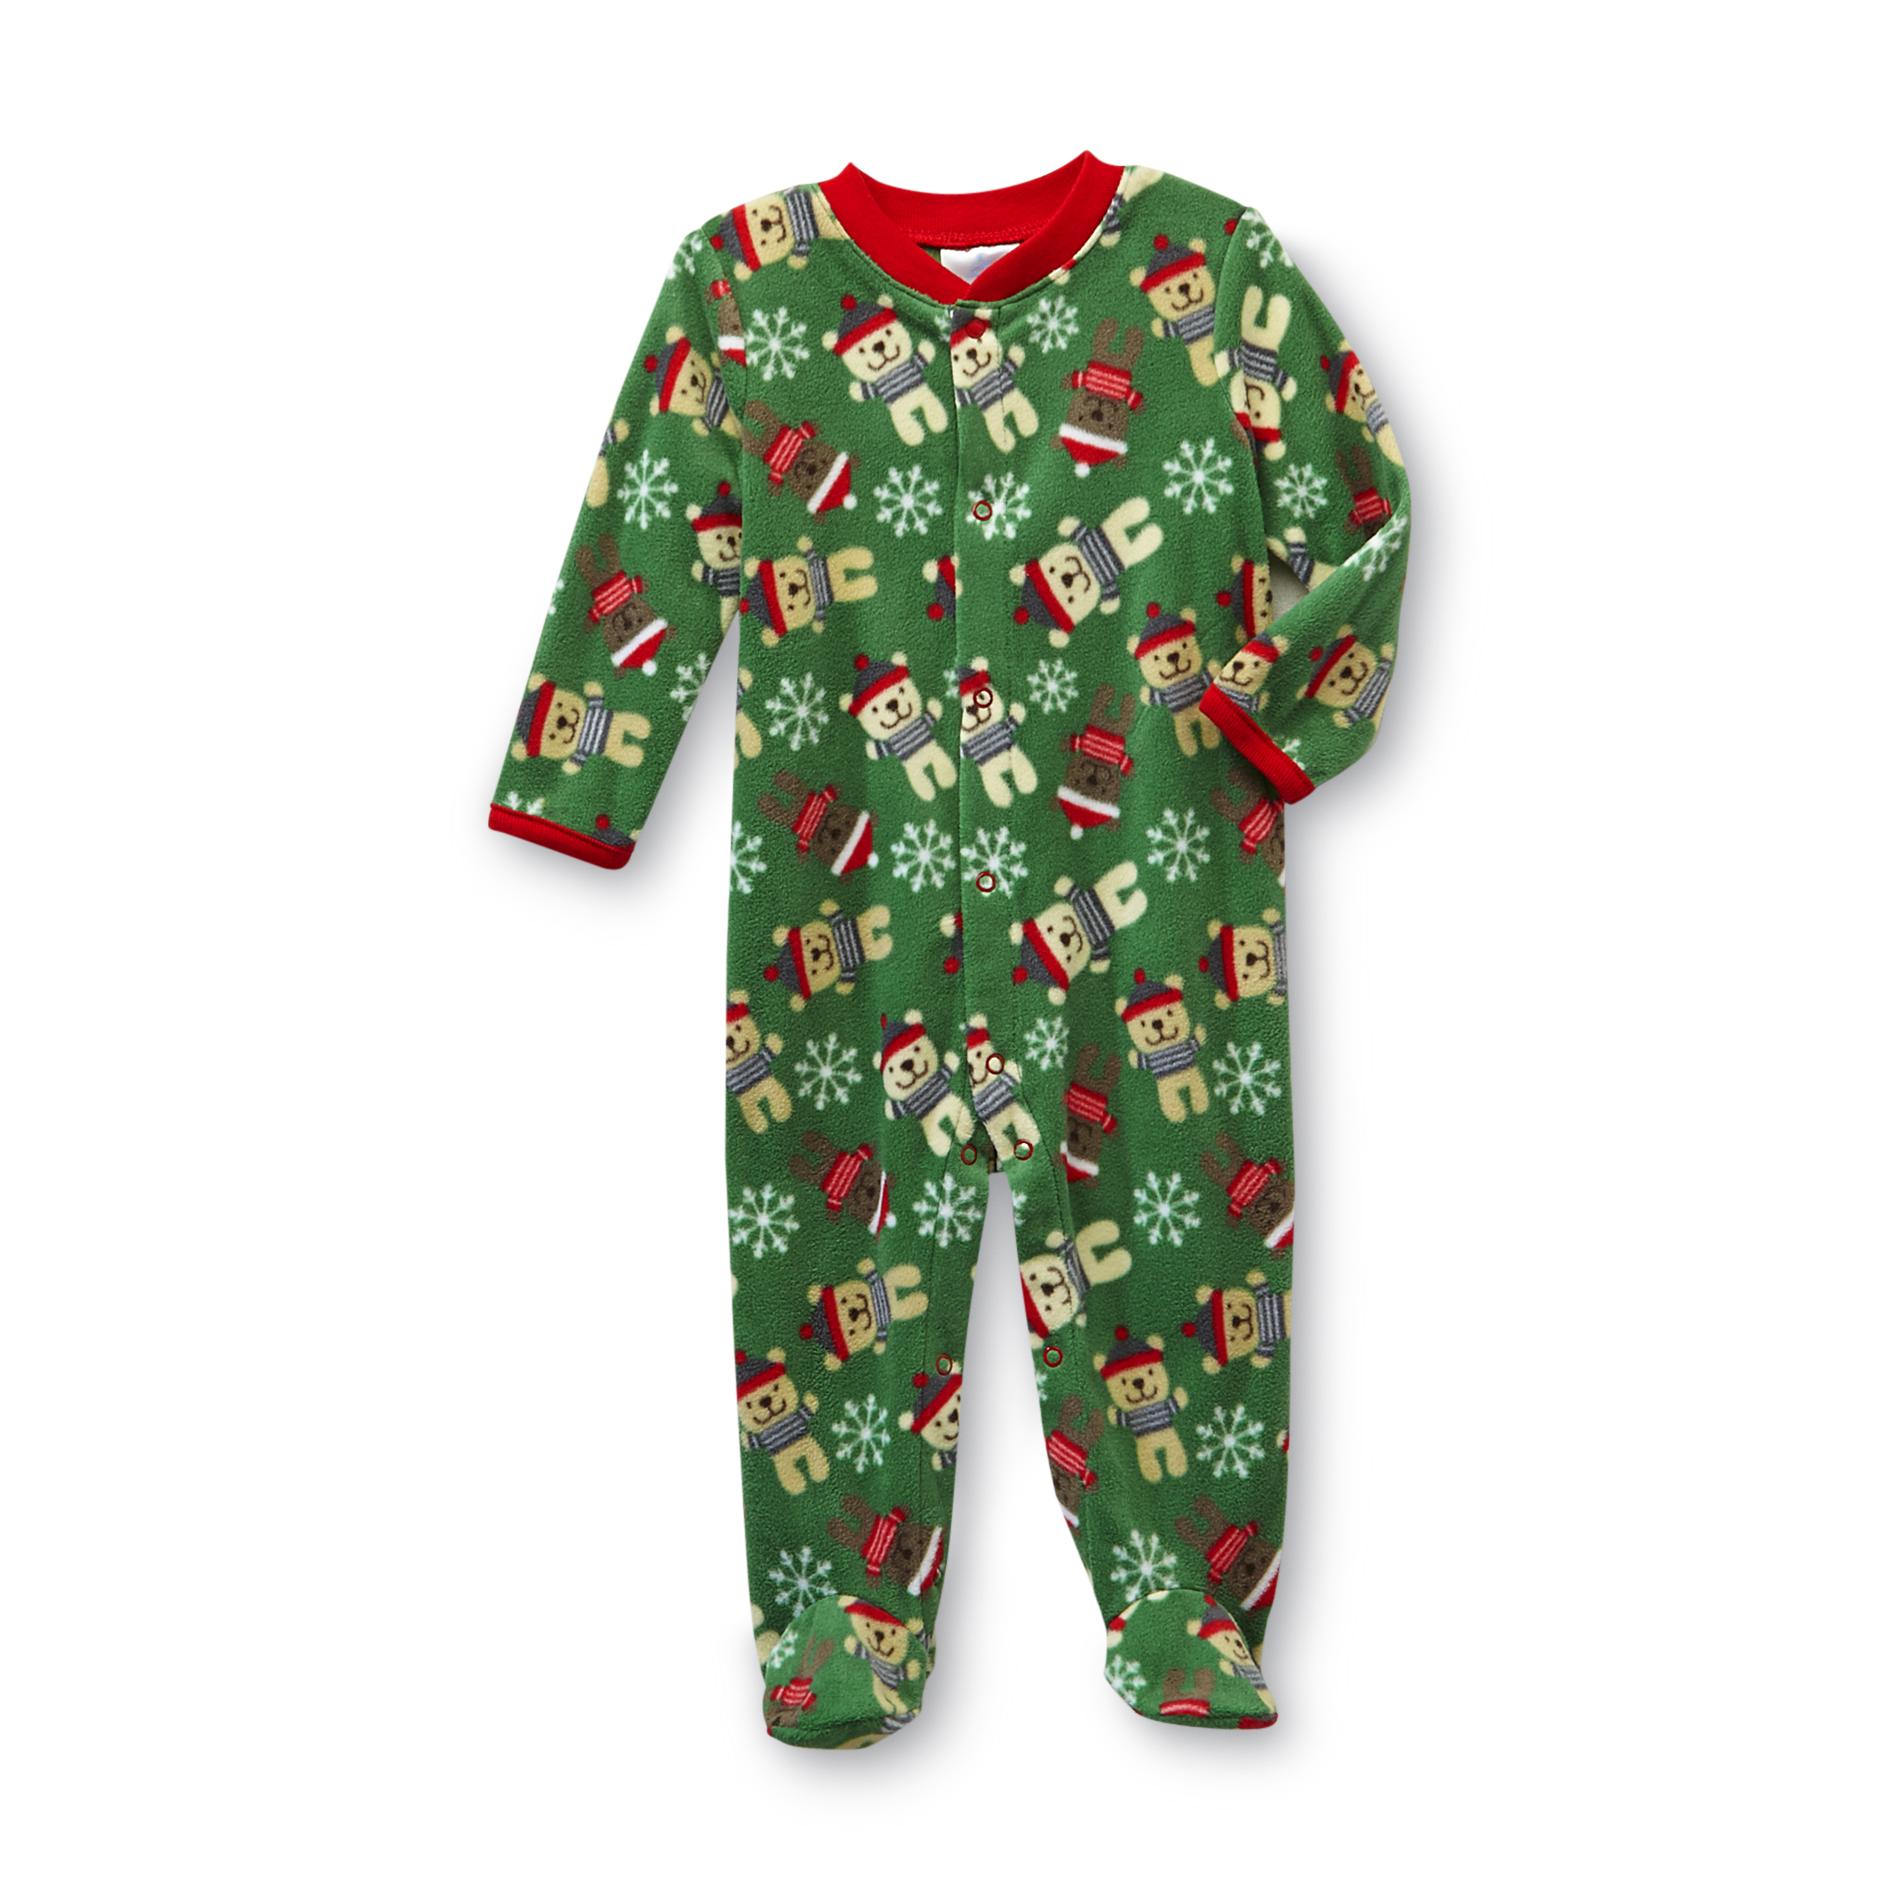 Small Wonders Infant Boy's Fleece Christmas Sleeper - Teddy Bears & Snowflakes